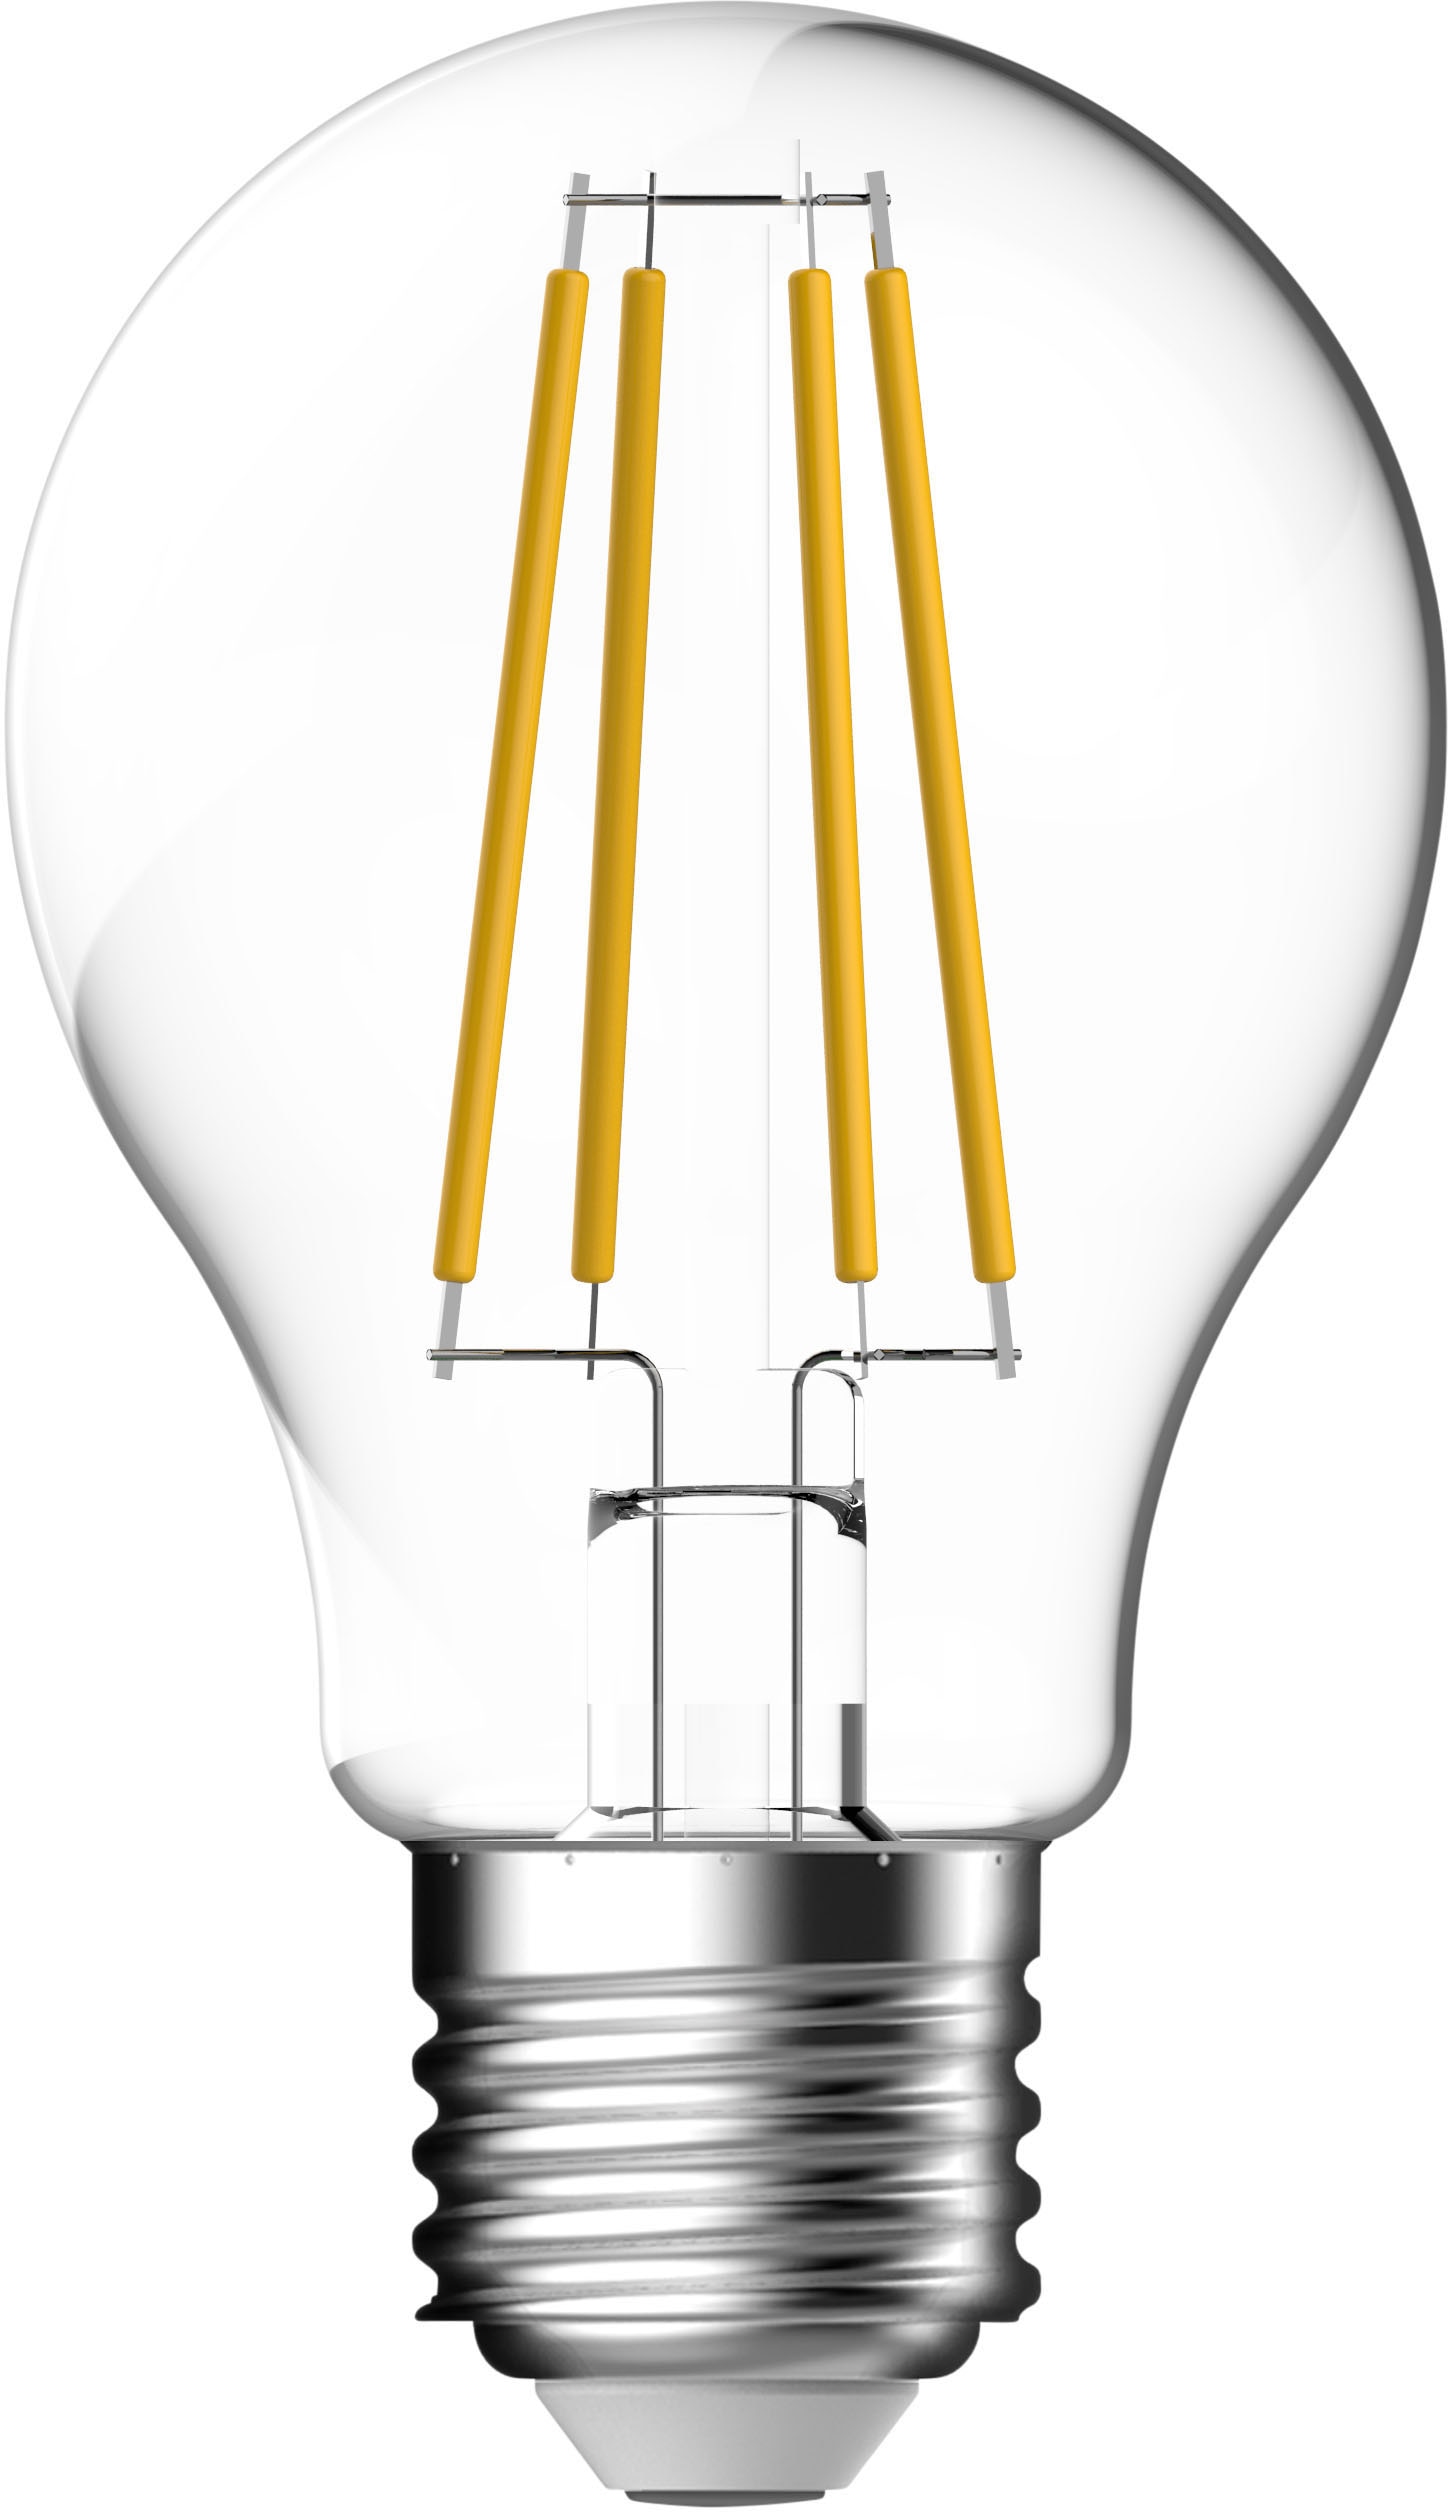 LED-Leuchtmittel »Paere«, 6 St., Set mit 6 Stück, je 8,6 Watt